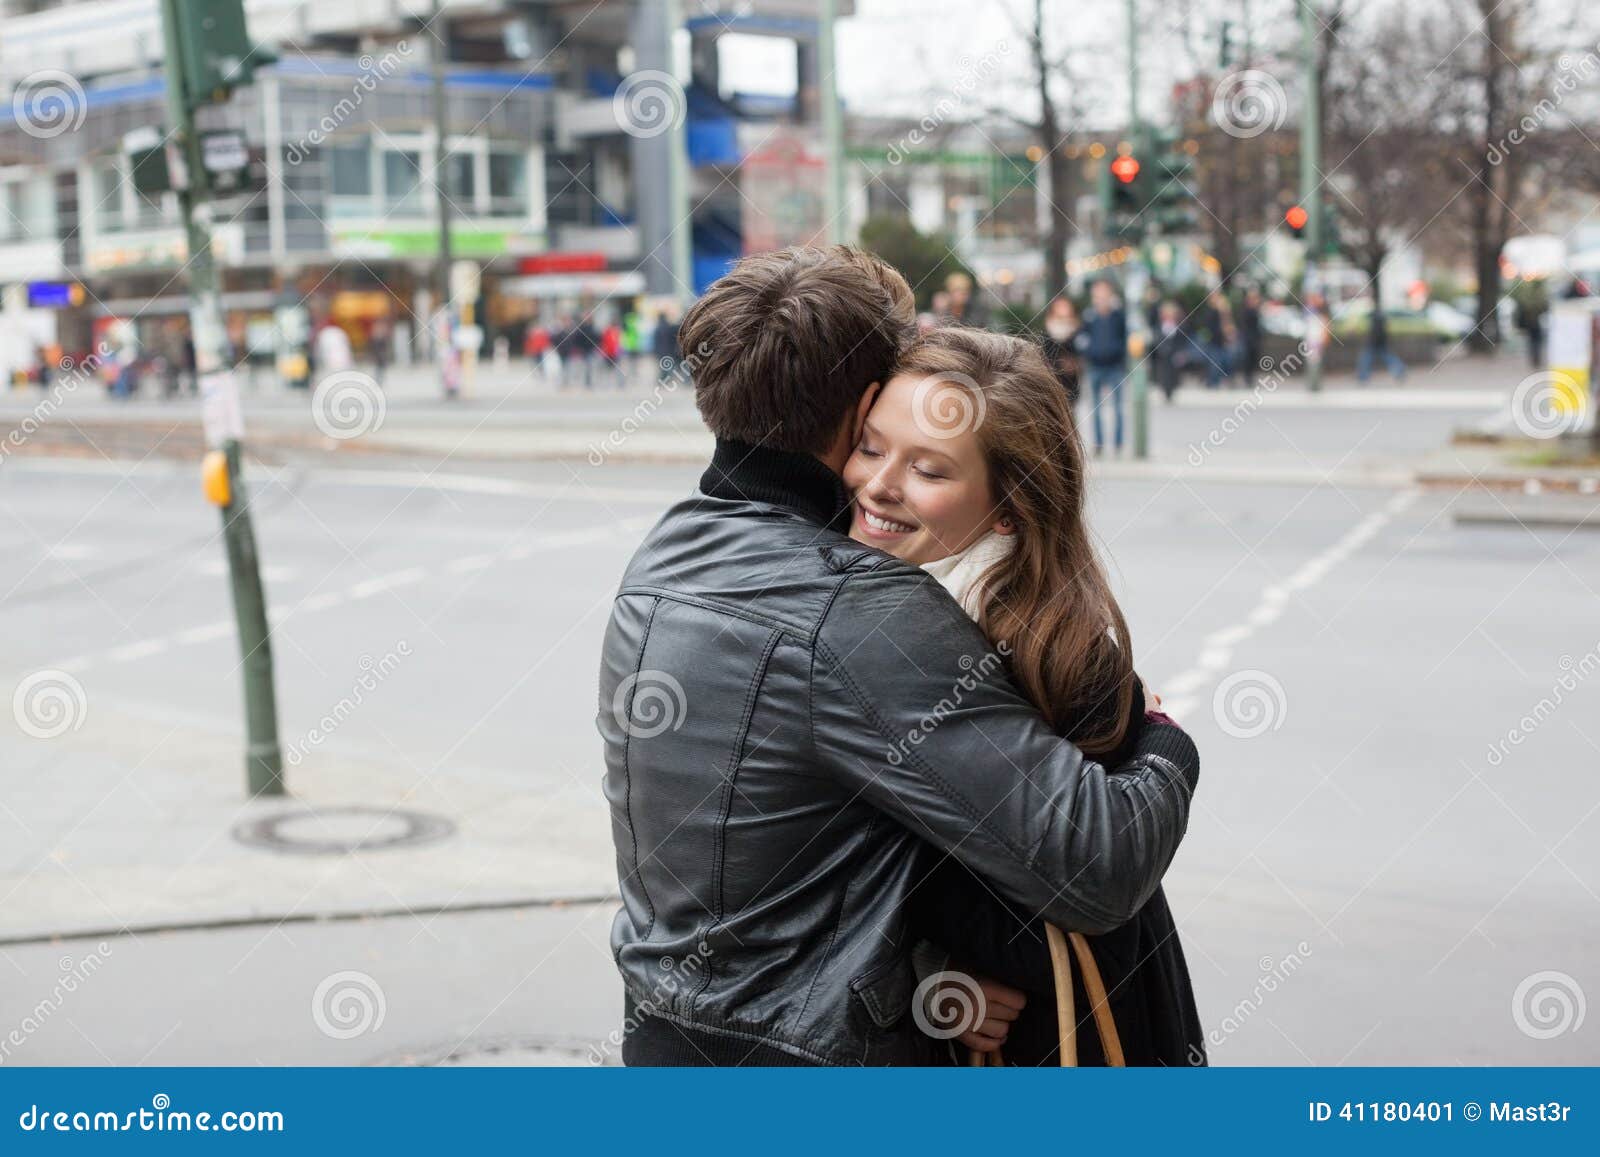 Незнакомый парень обнимает. Обнимашки на улице. Пара обнимается на улице. Девушки обнимаются на улице. Обнимашки парочек на улице.